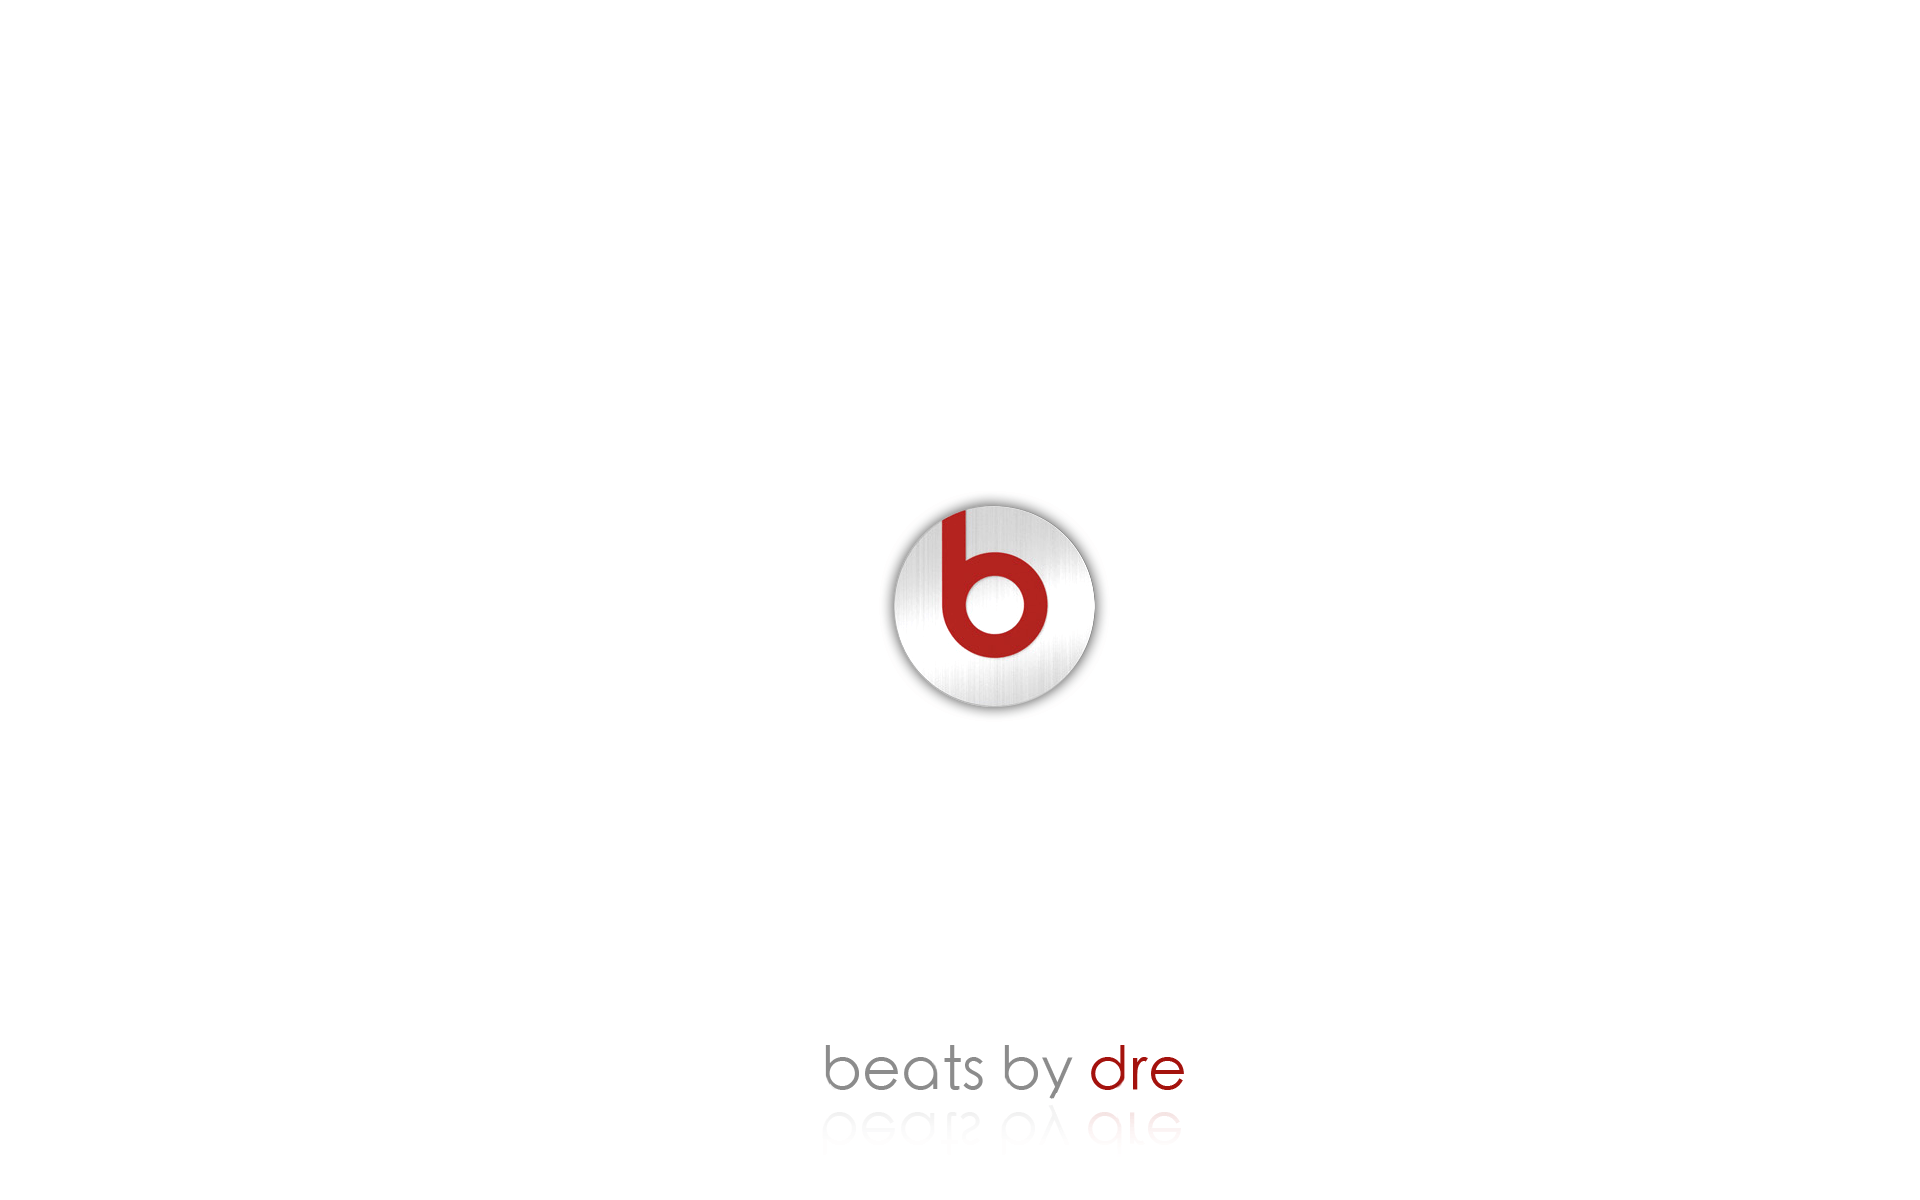 Beats by Dr. Dre Logo - Cool-Beats-By-Dr-Dre-logo-wallpaper | wallpaper.wiki